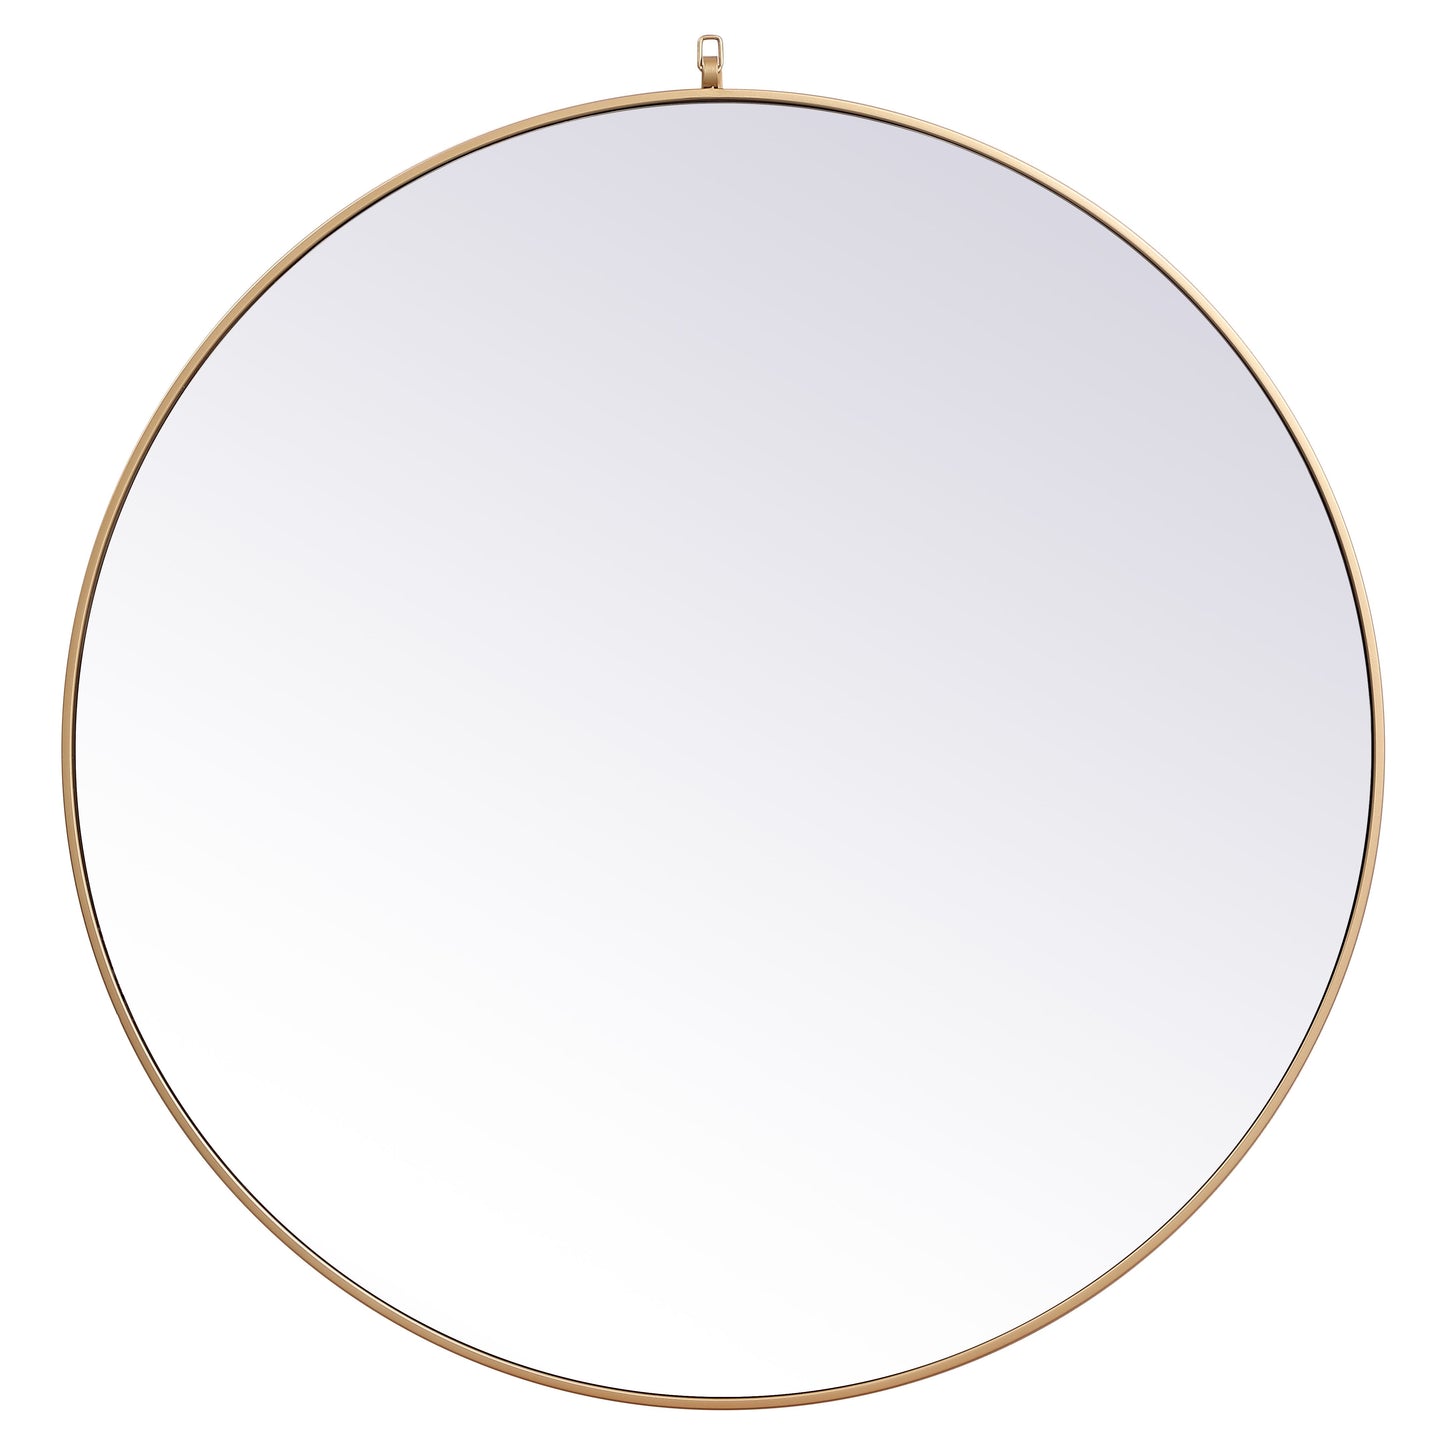 MR4745BR Rowan 45" x 45" Metal Framed Round Mirror with Decorative Hook in Brass